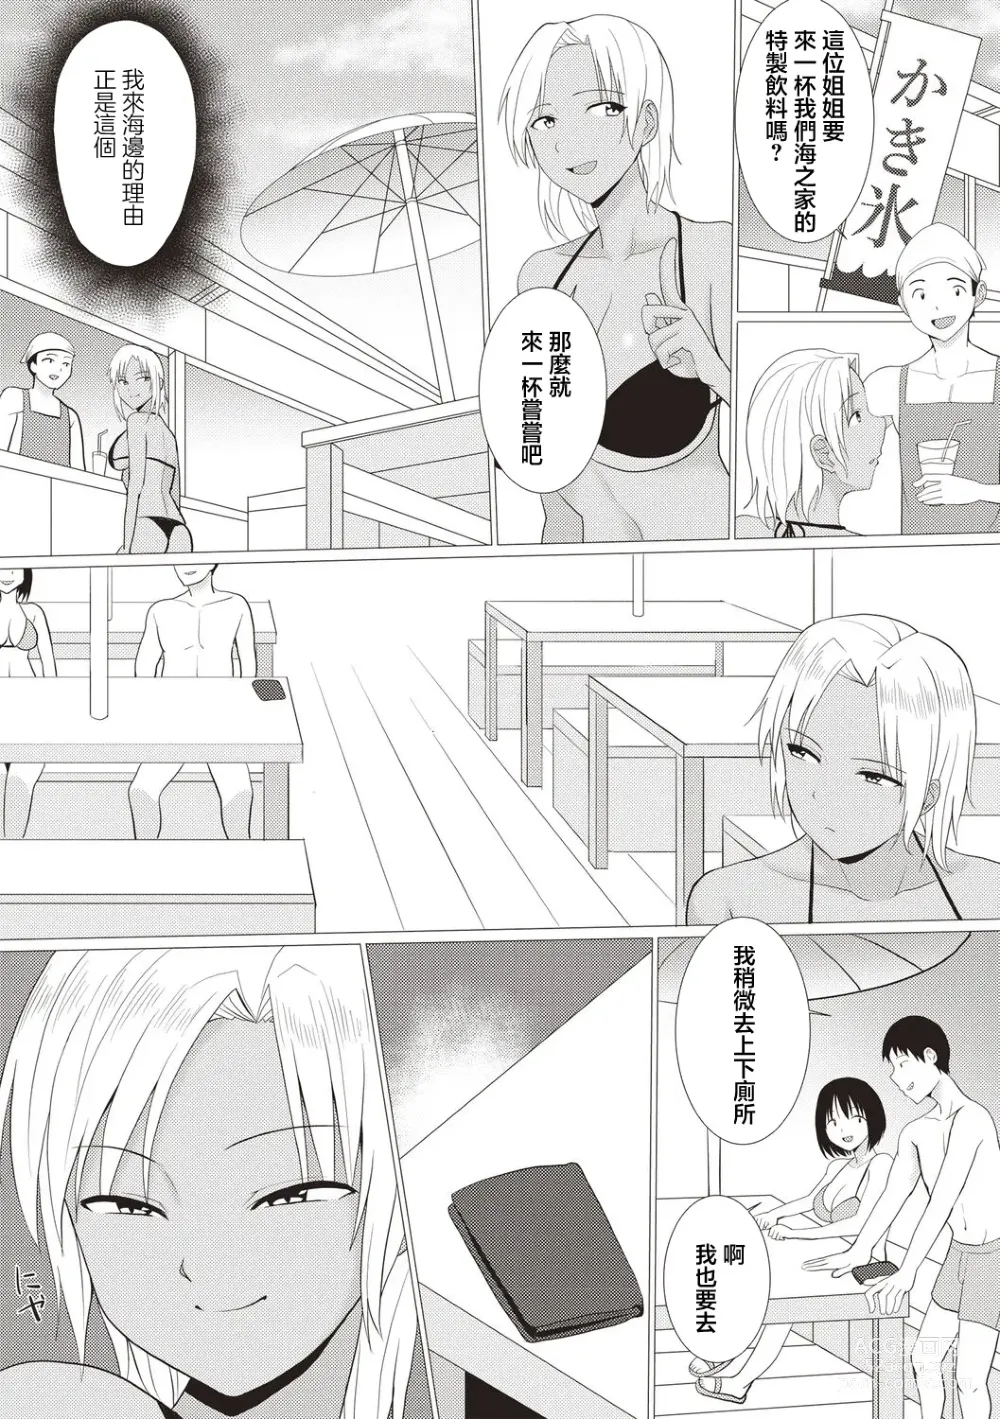 Page 2 of manga 辣妹打炮!